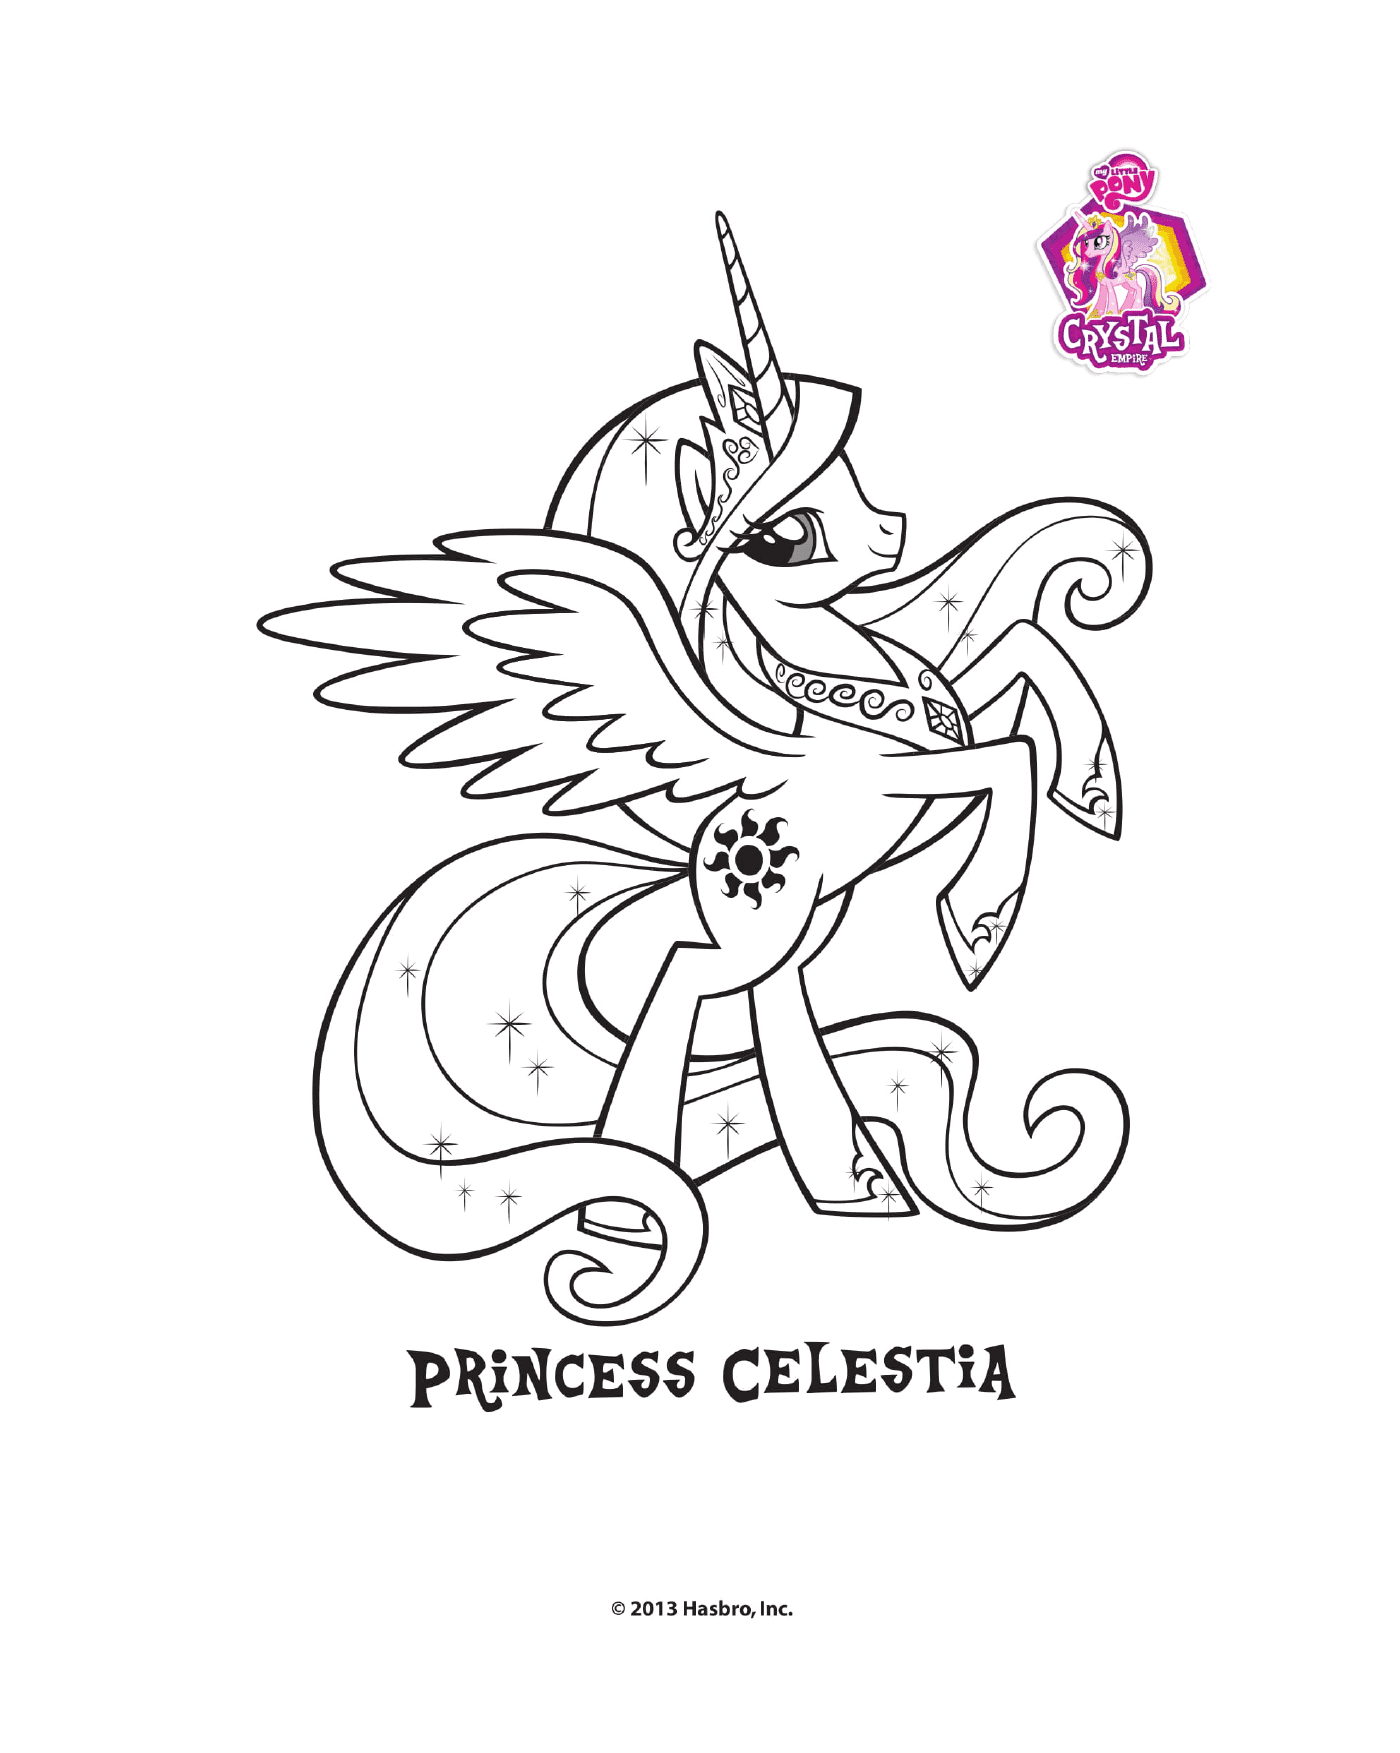  Princess Celestia of the Crystal Empire 